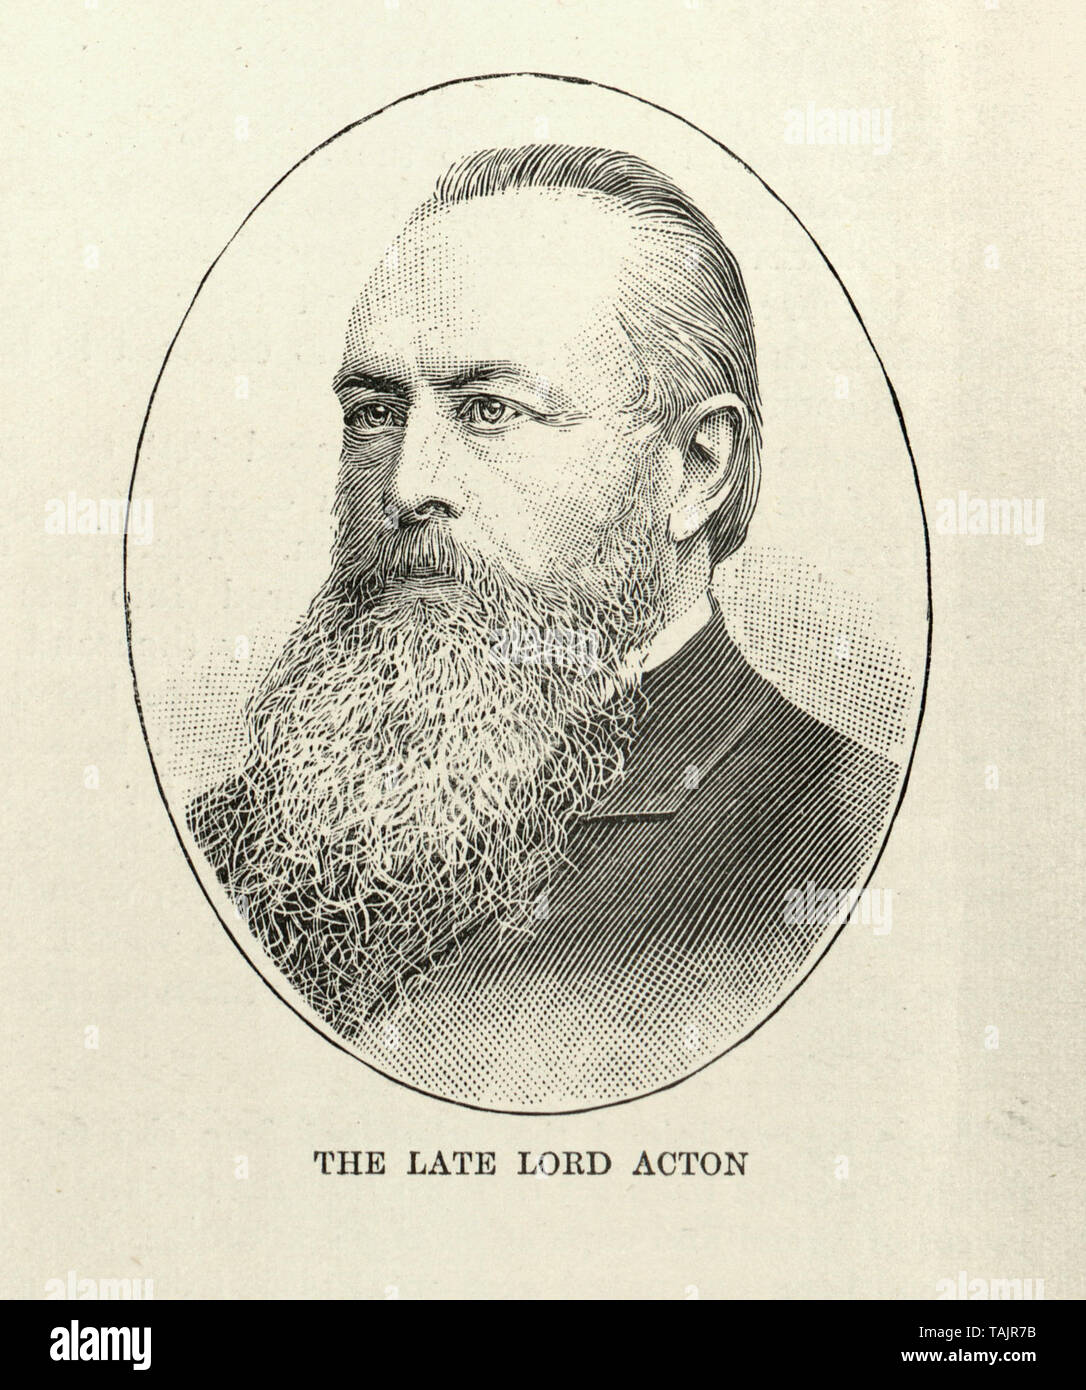 John Dalberg-Acton, 1st Baron Acton (10 January 1834 – 19 June 1902), was an English Catholic historian, politician, and writer. Stock Photo